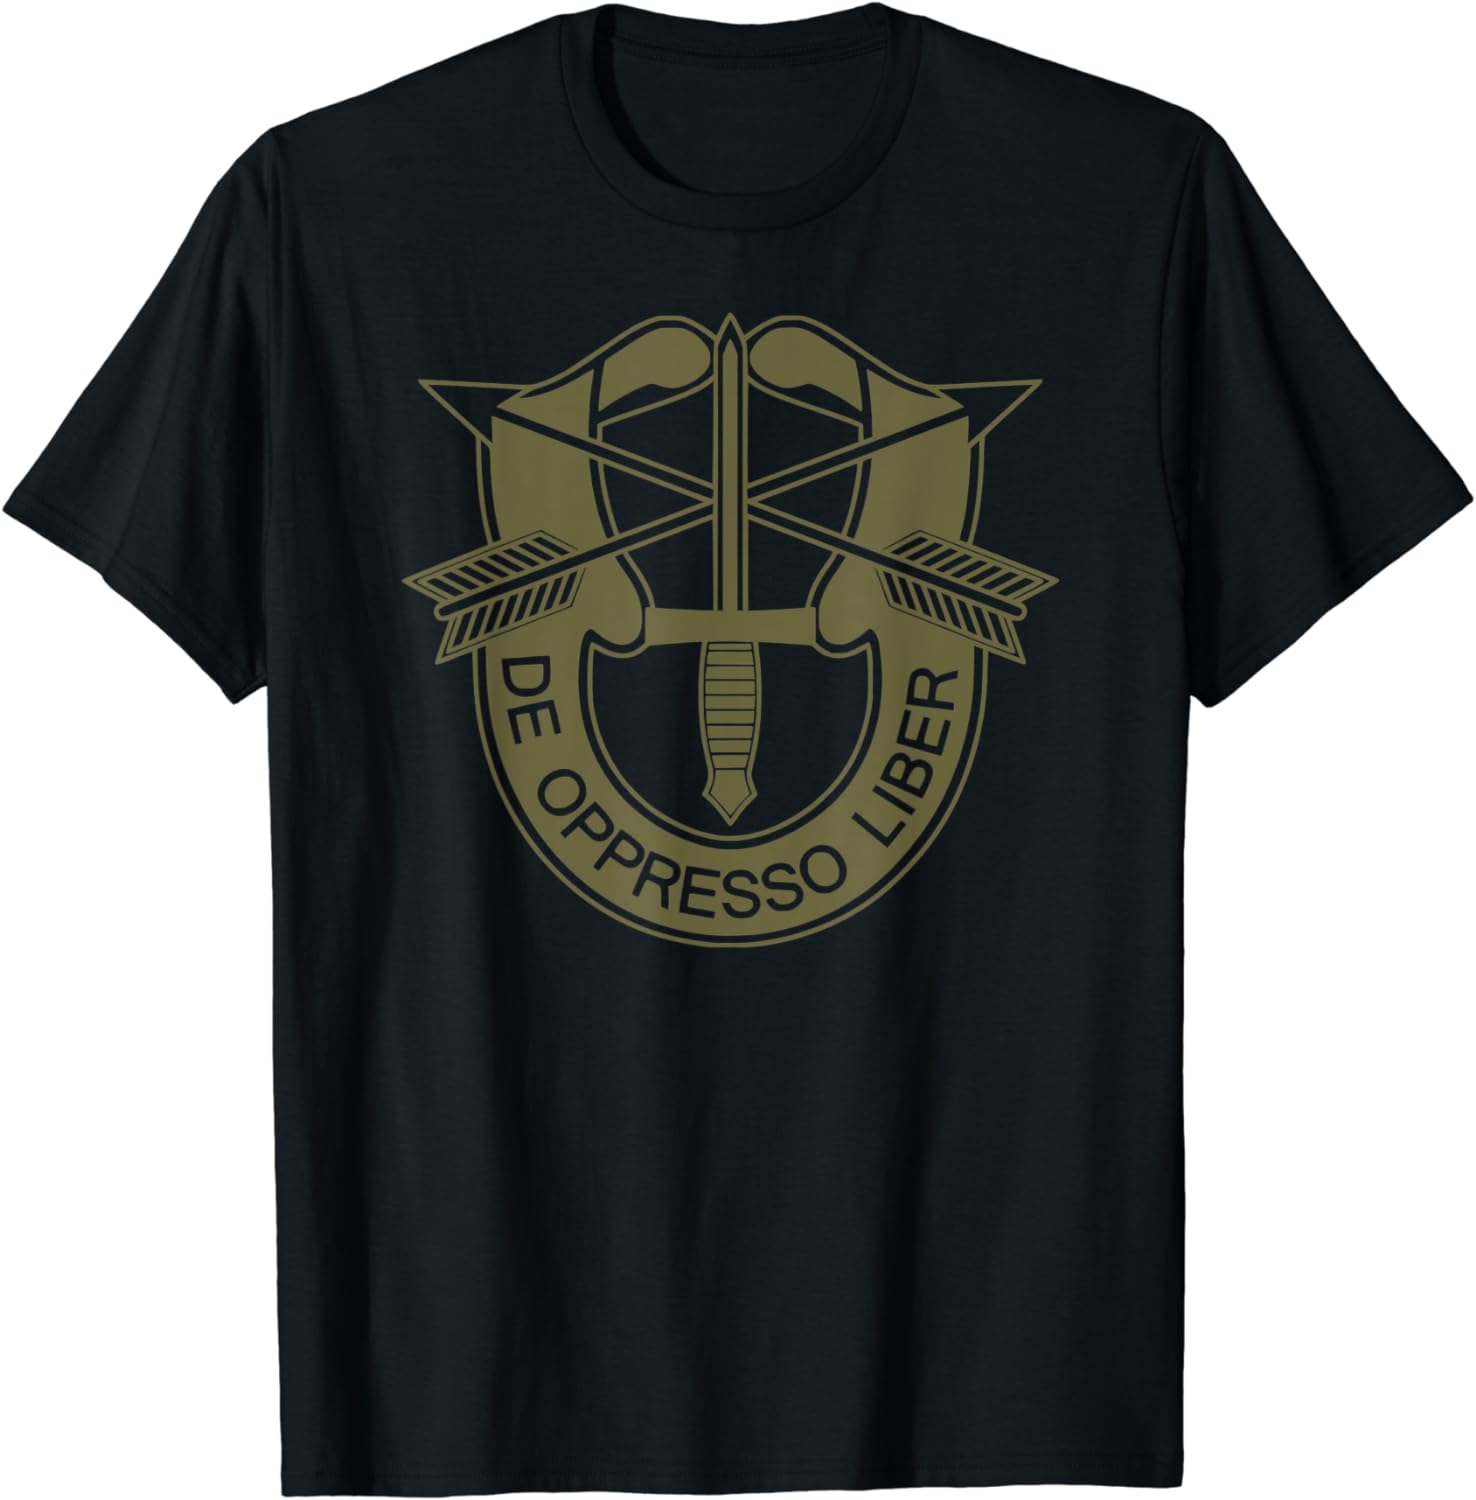 US Special Forces - De Oppresso Liber - OCP OD Green T-Shirt - Walmart.com